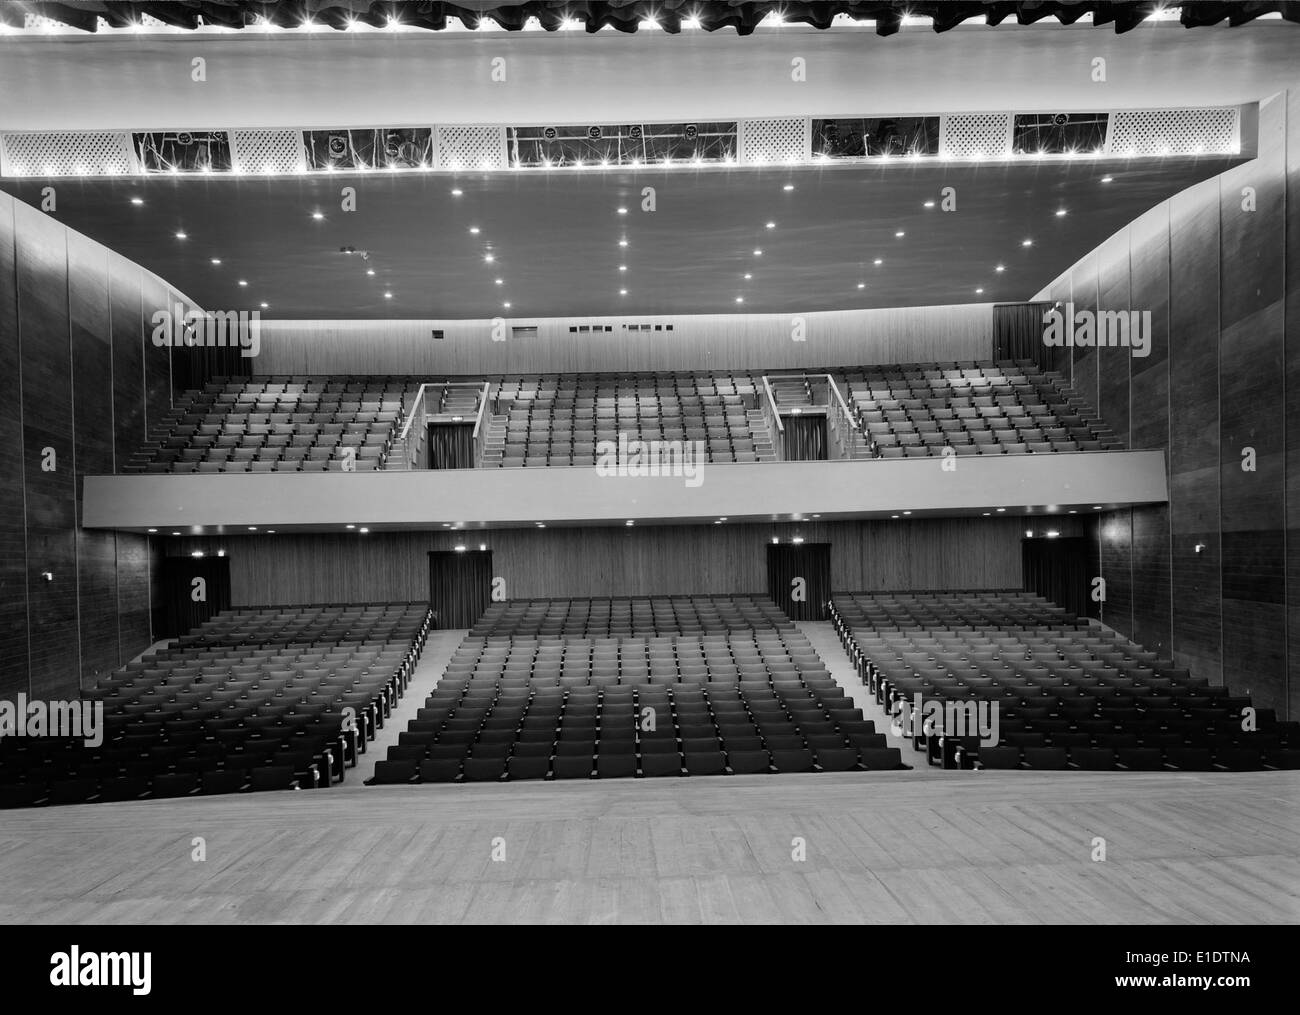 Teatro Gil Vicente, Coimbra, Portugal Stock Photo: 69760918 - Alamy